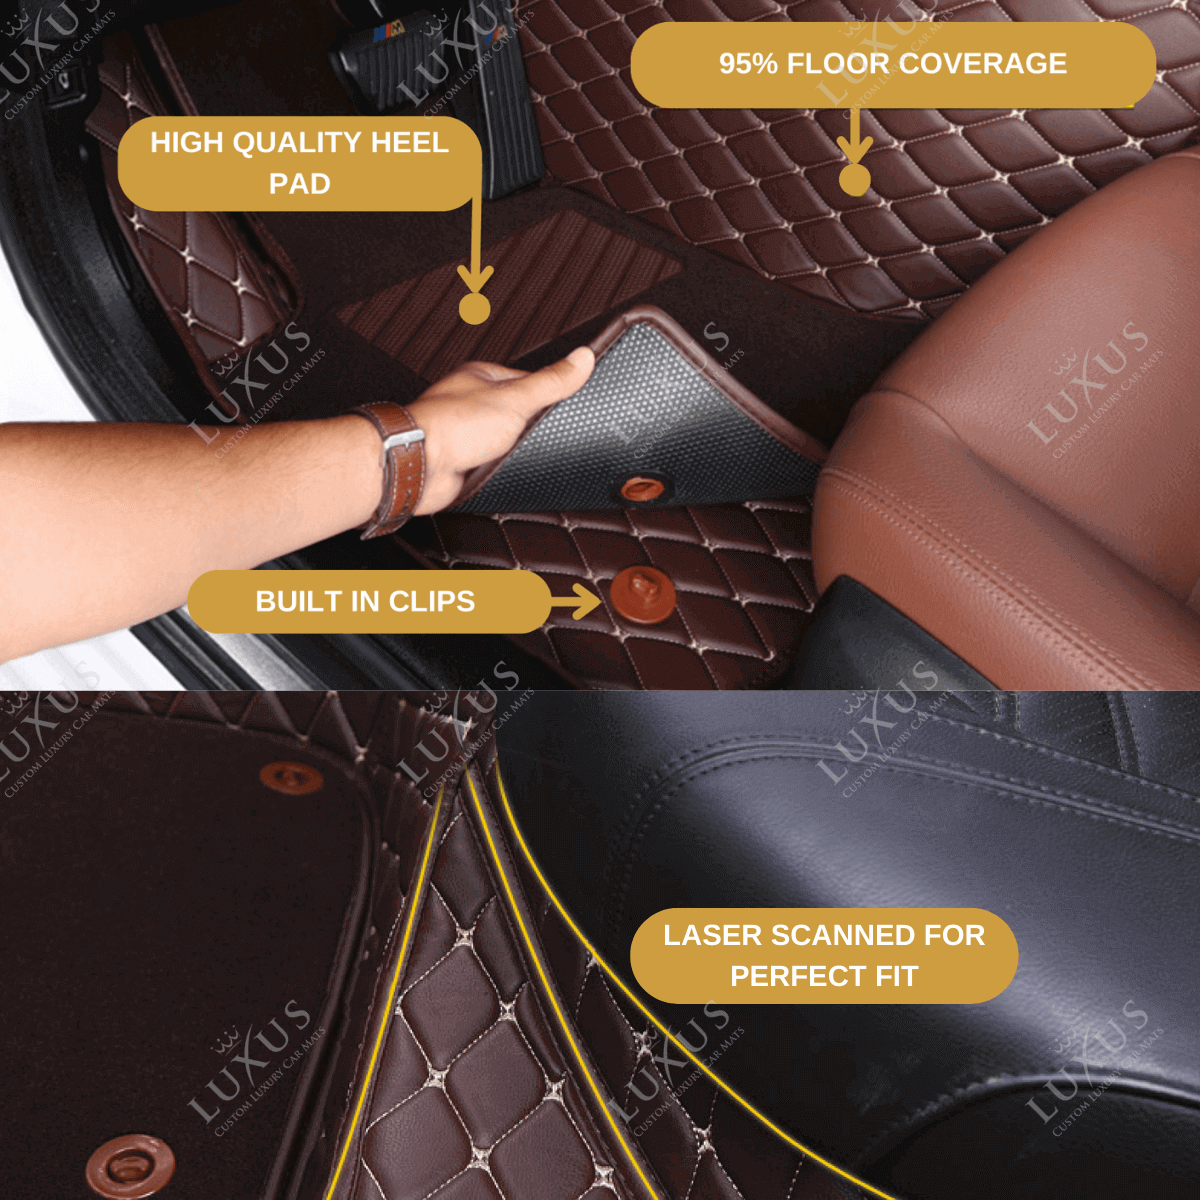 Chocolate Brown Honeycomb Base & Grey Top Carpet Double Layer Luxury Car Mats Set